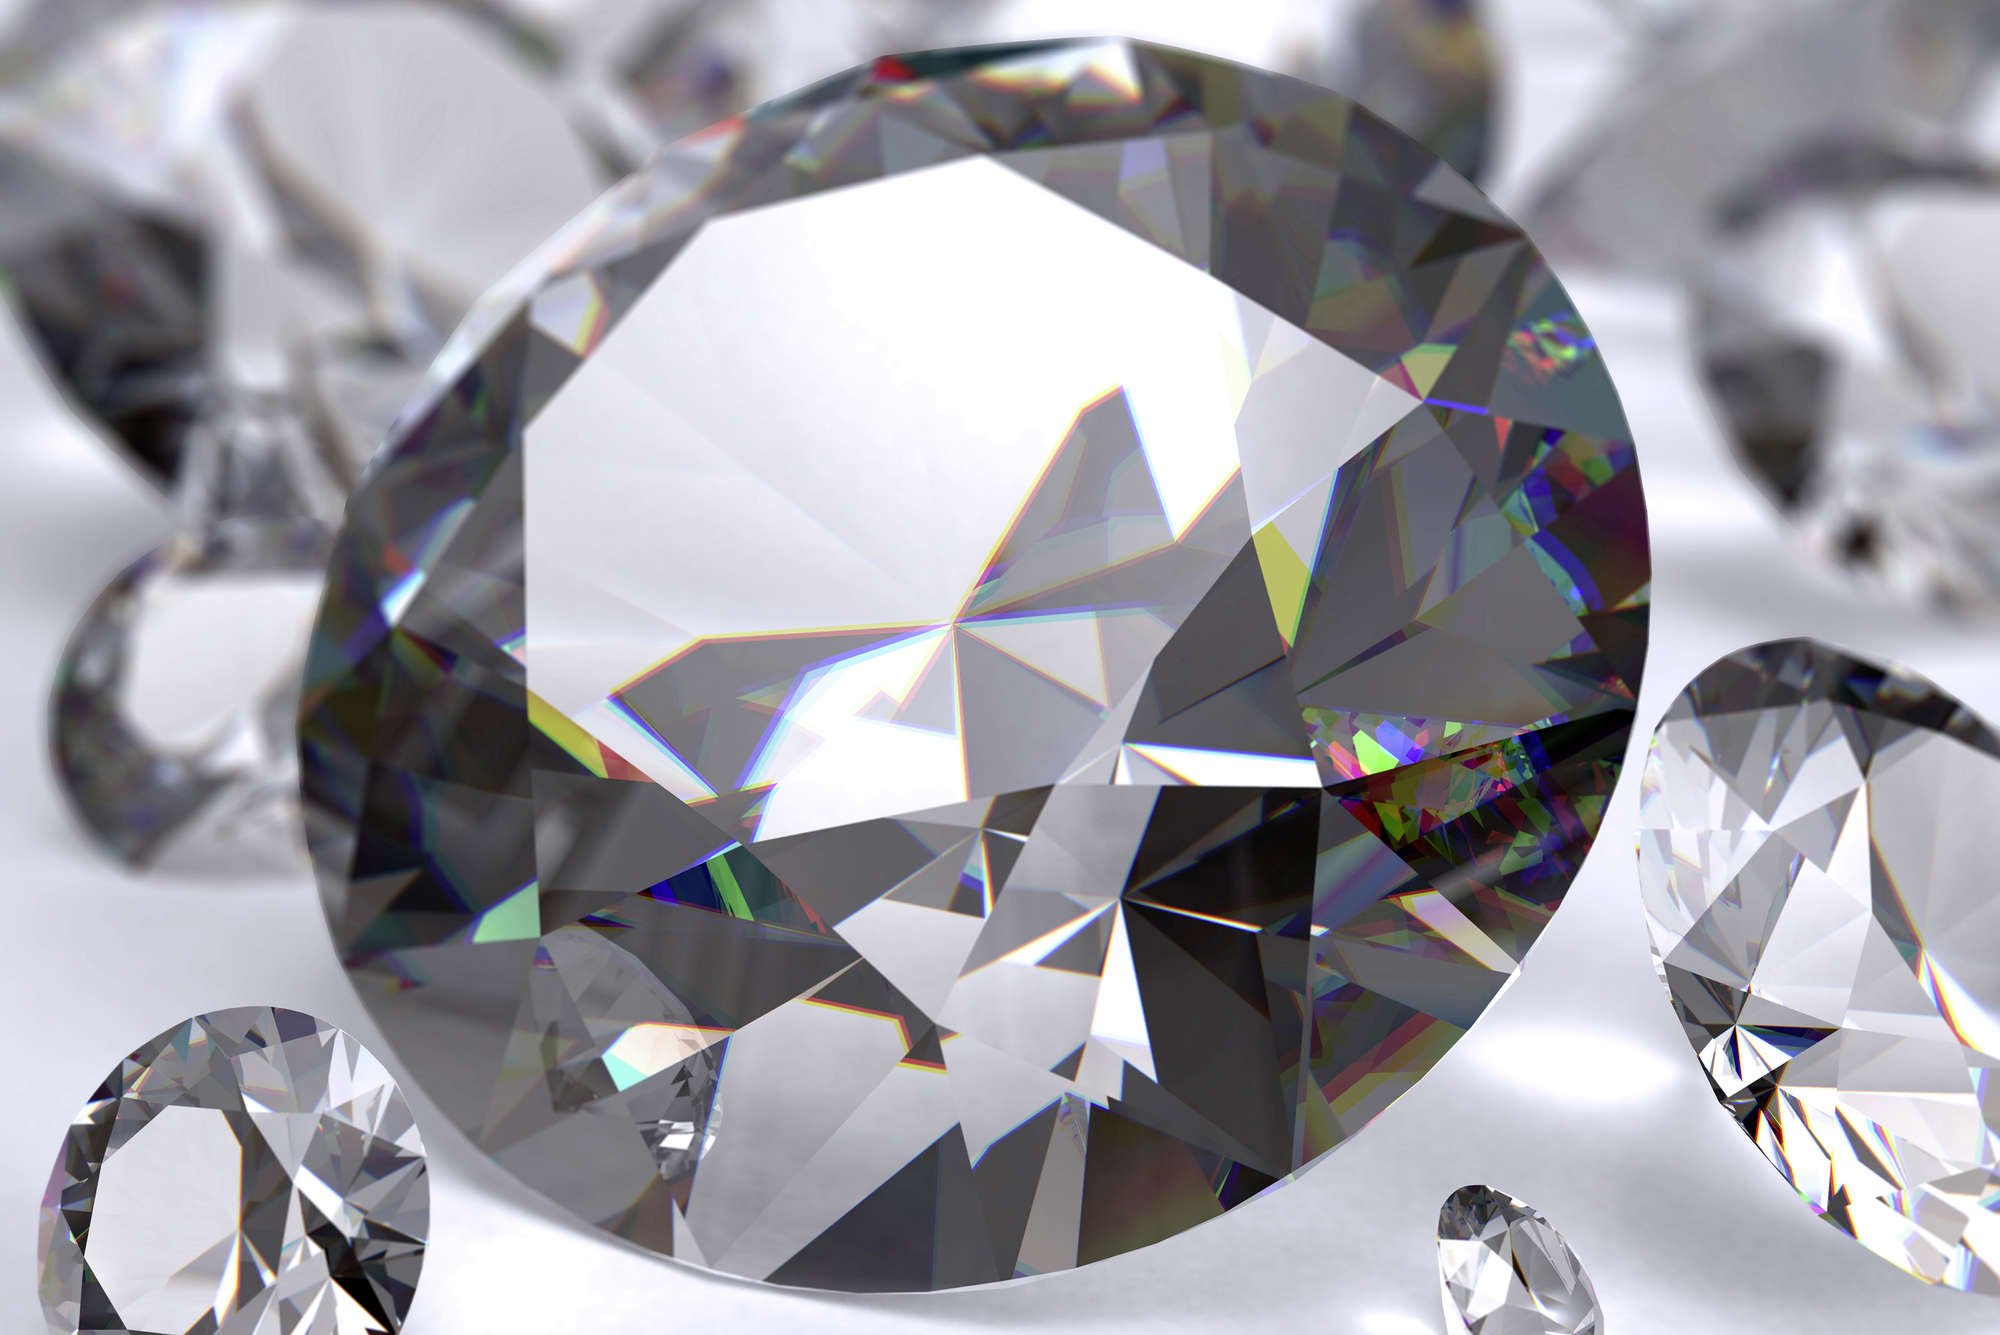             Fototapete großer Diamant – Premium Glattvlies
        